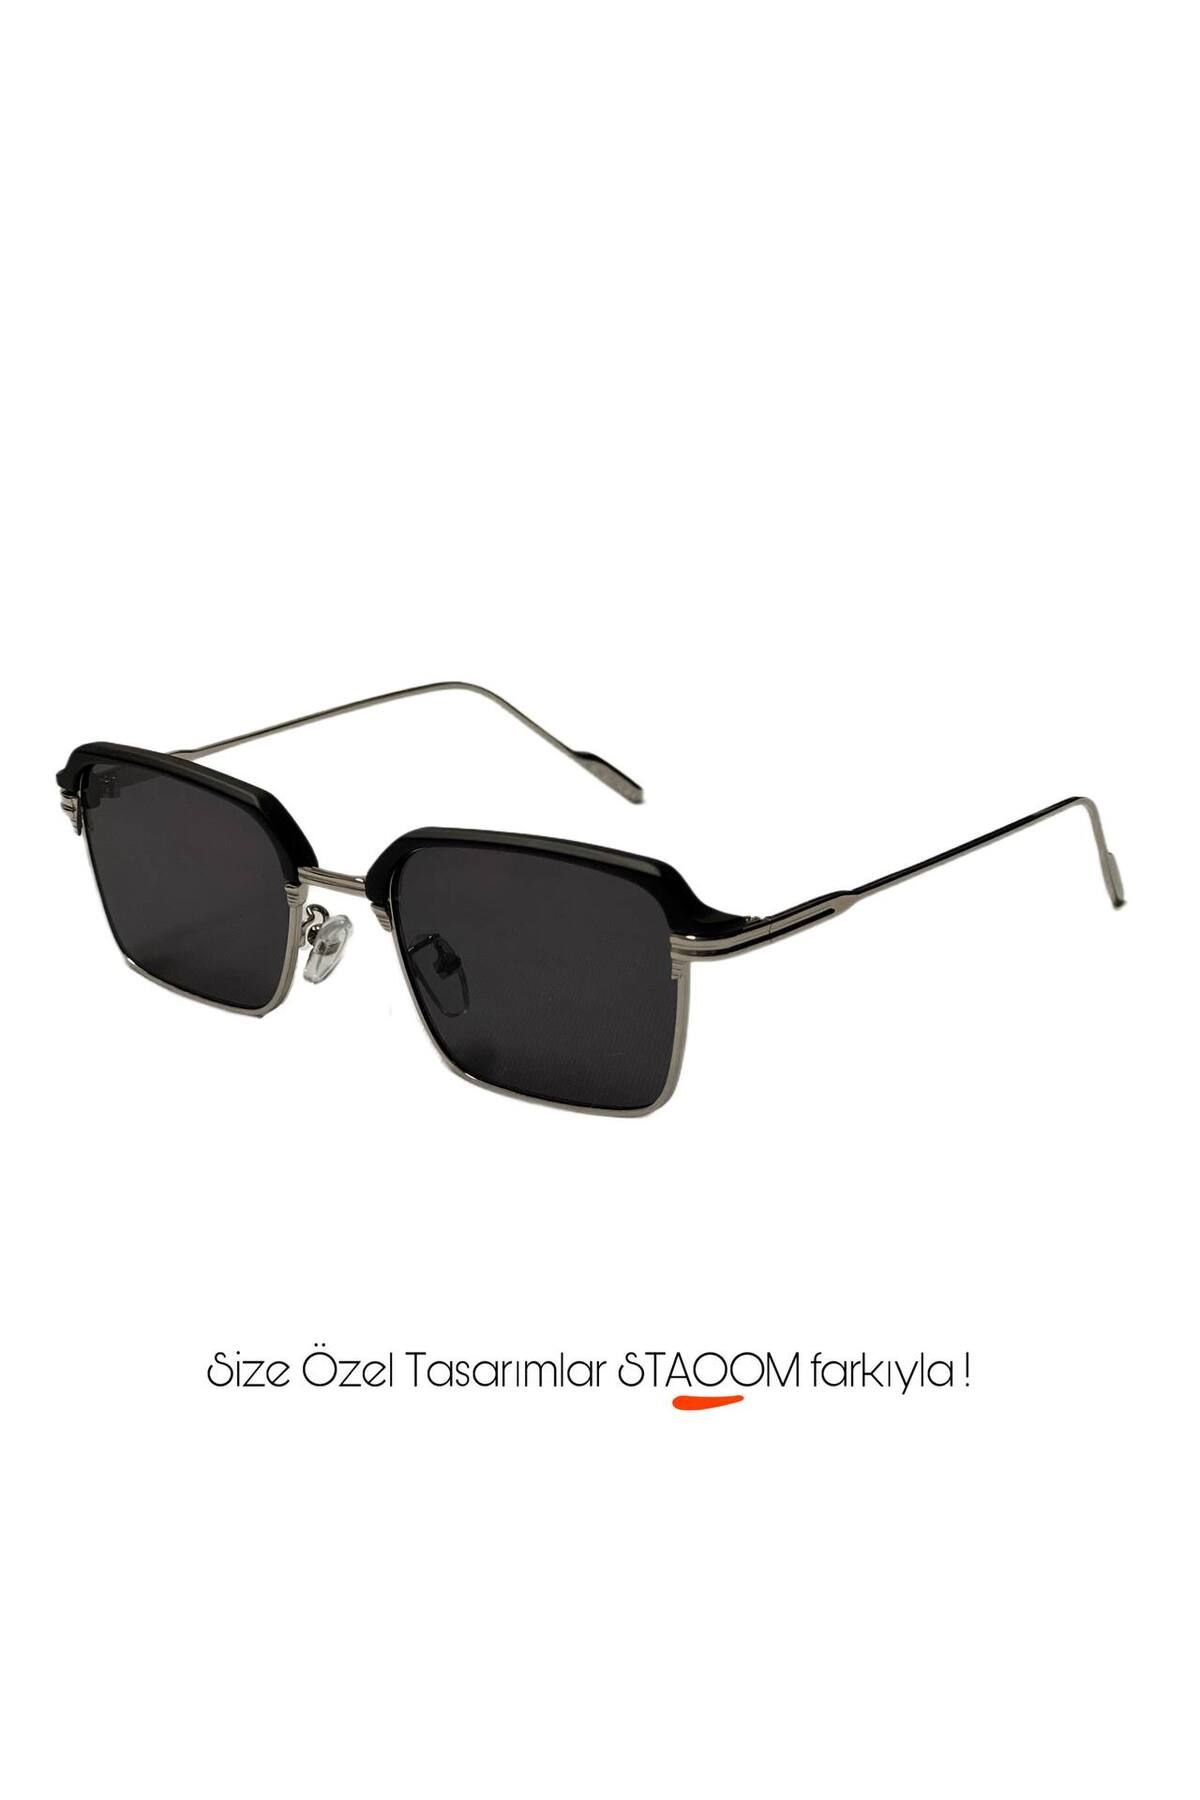 STAOOM unisex first quality sunglasses uv 400 glass